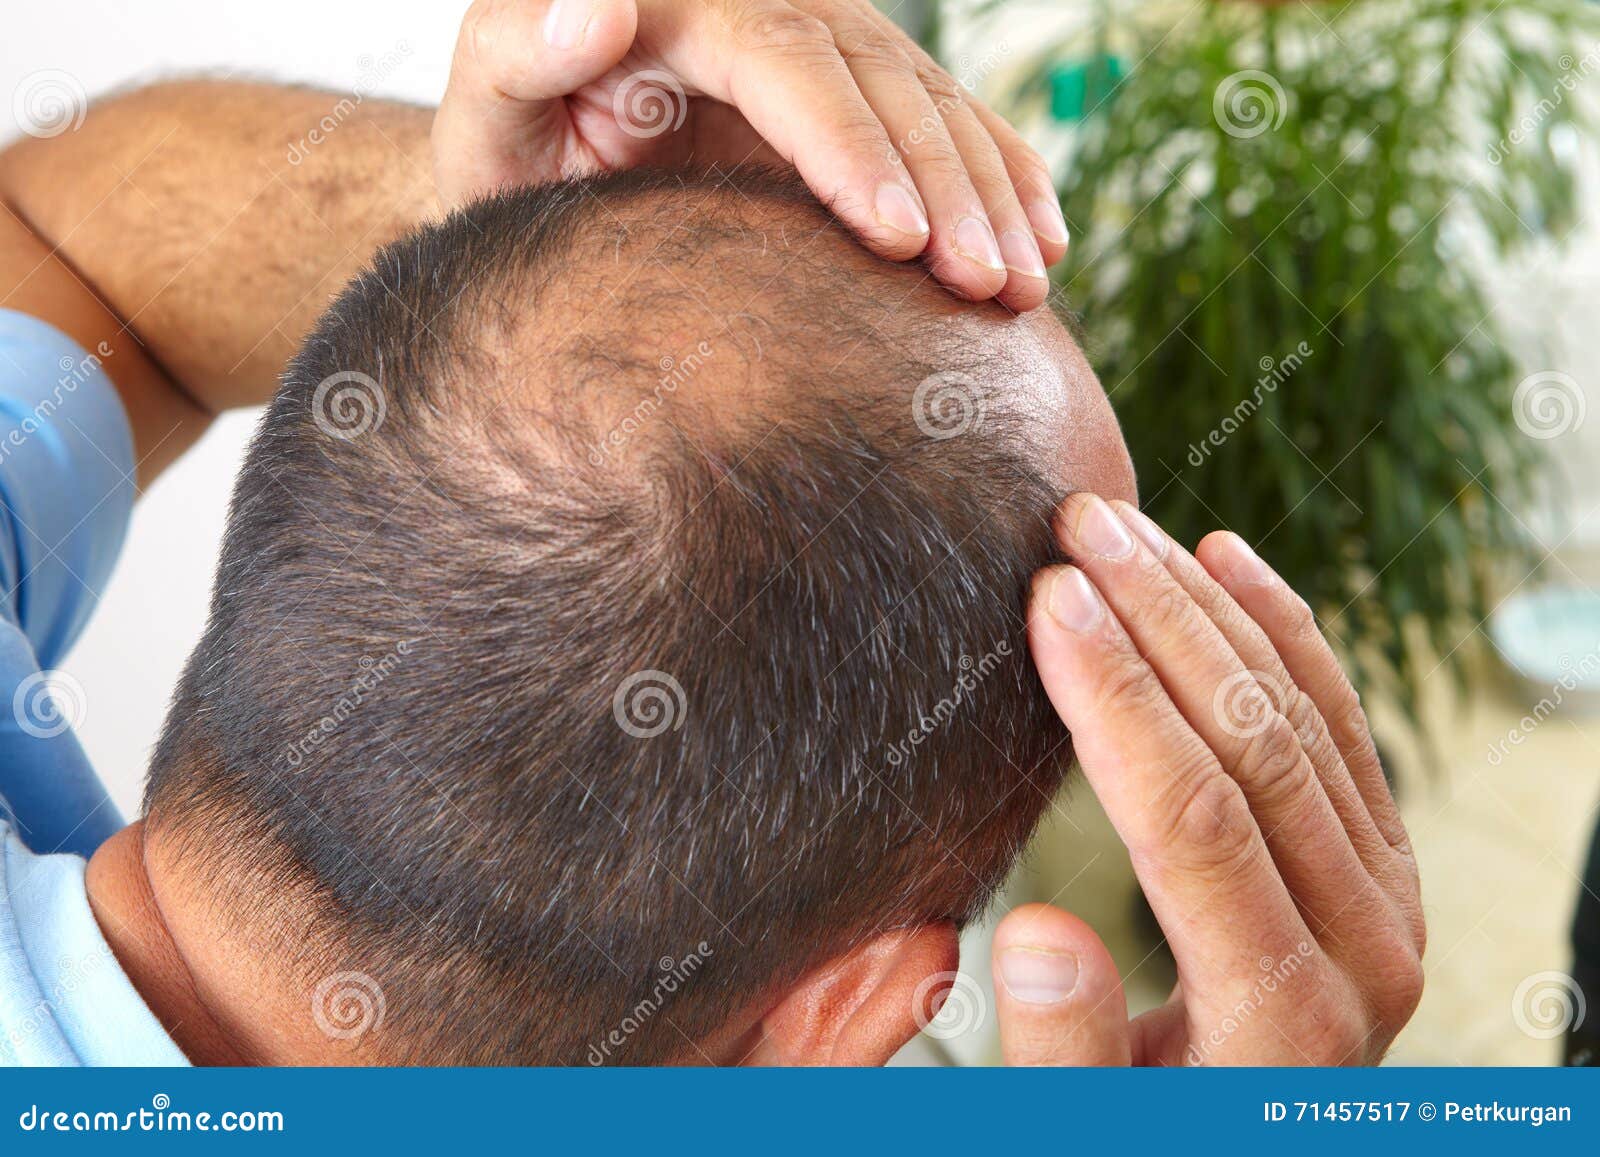 senior man and hair loss issue